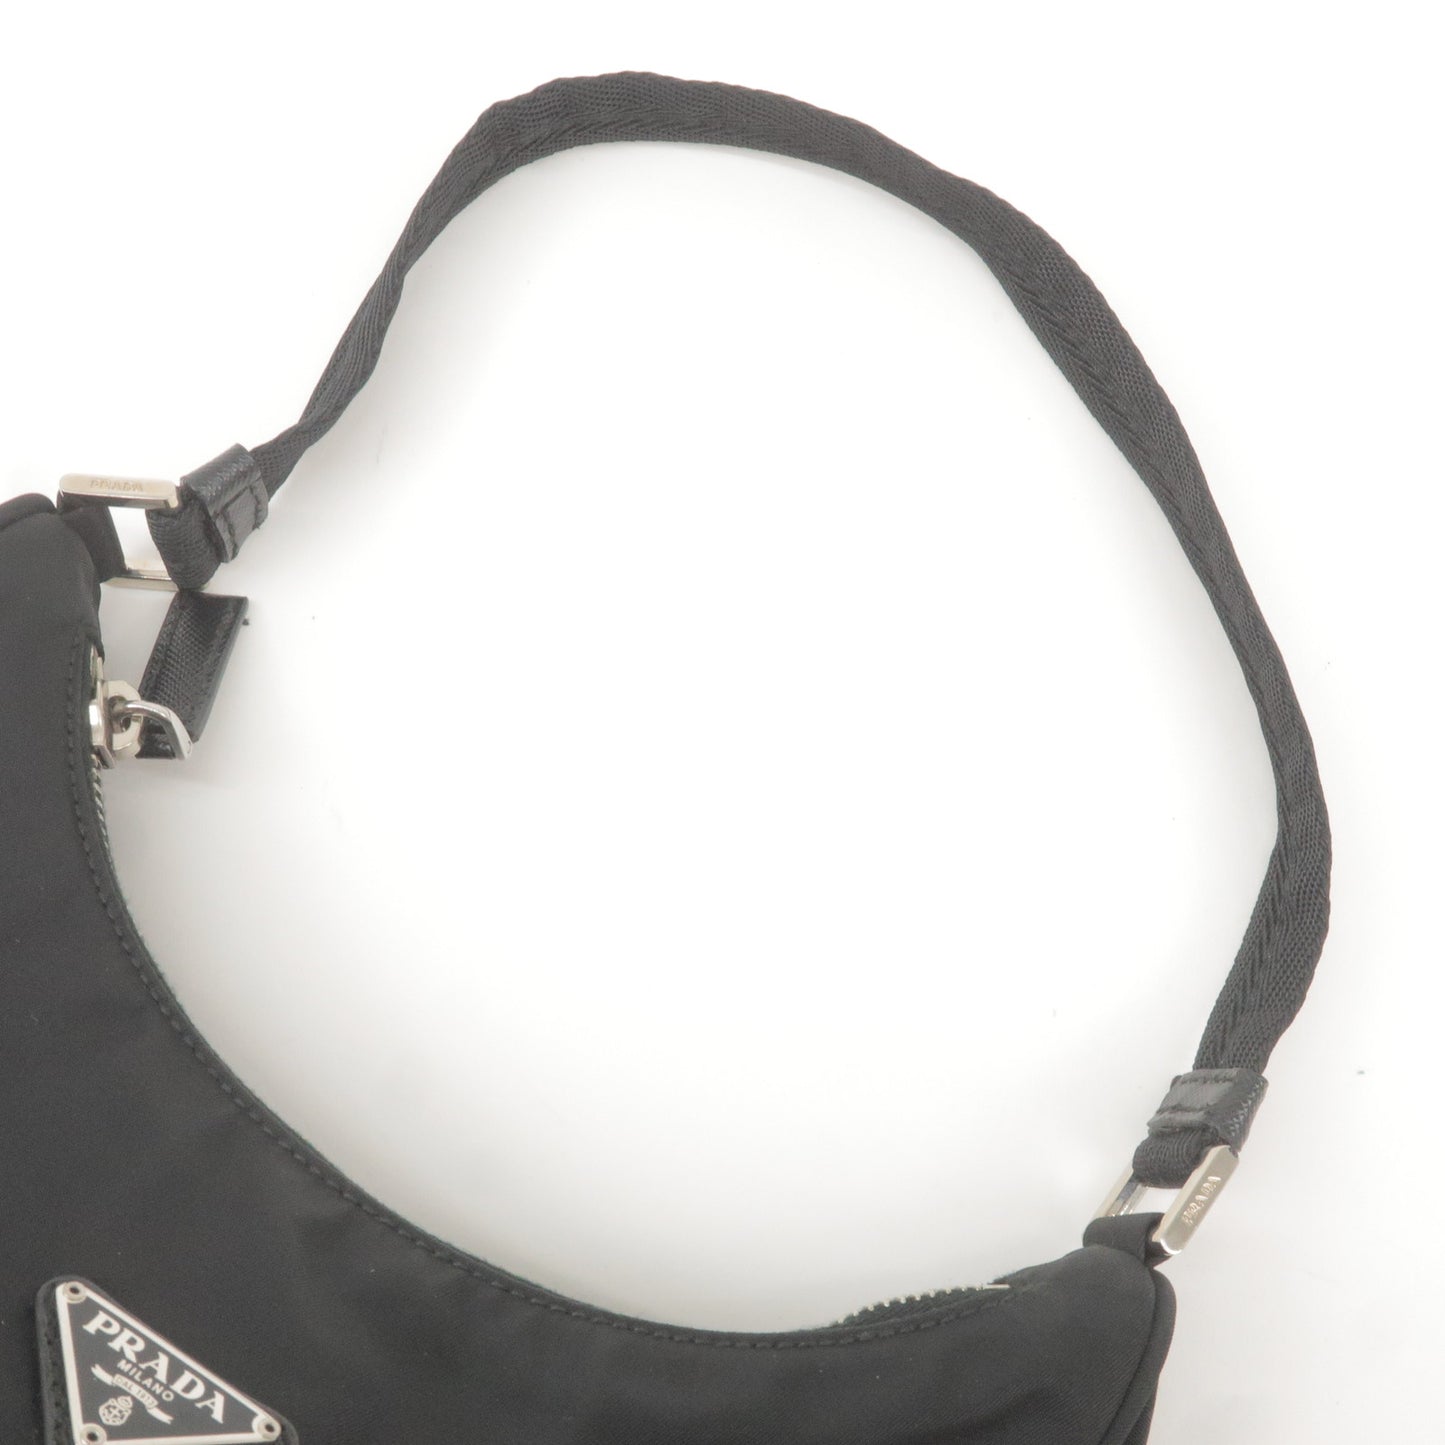 PRADA Logo Nylon Leather Shoulder Bag NERO Black 1N1204